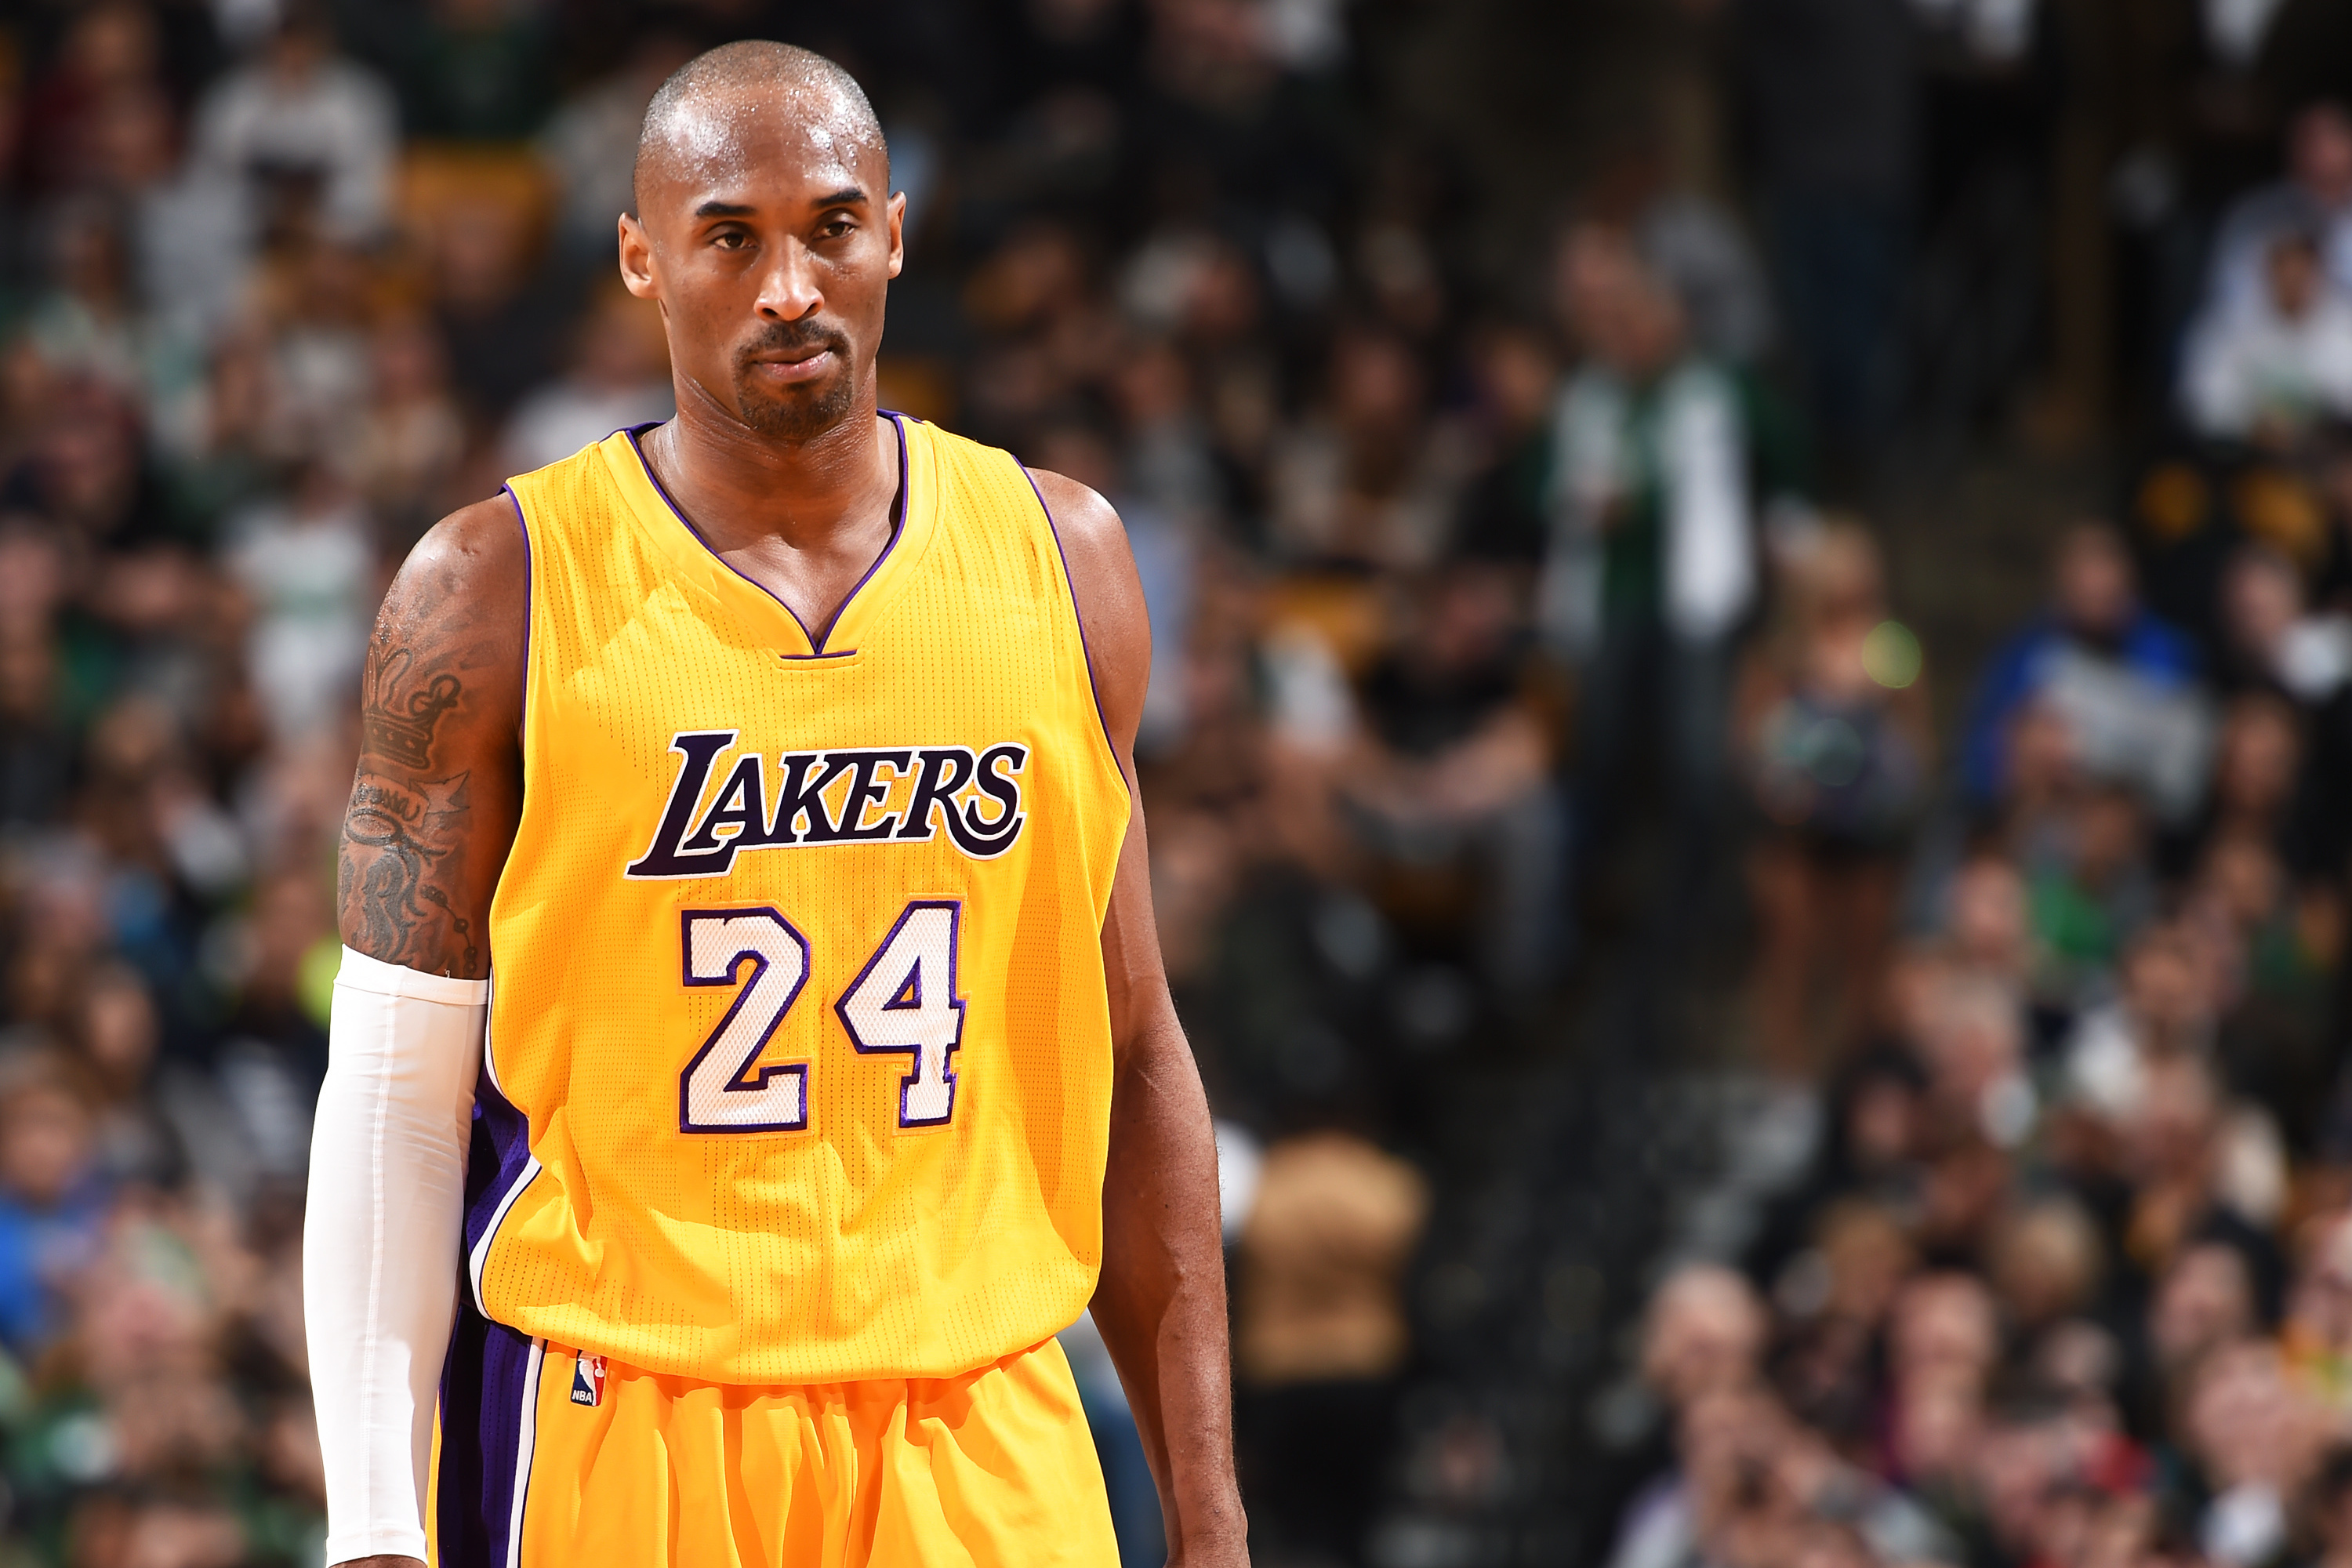 Arash Markazi on X: The Lakers will retire Kobe Bryant's jersey